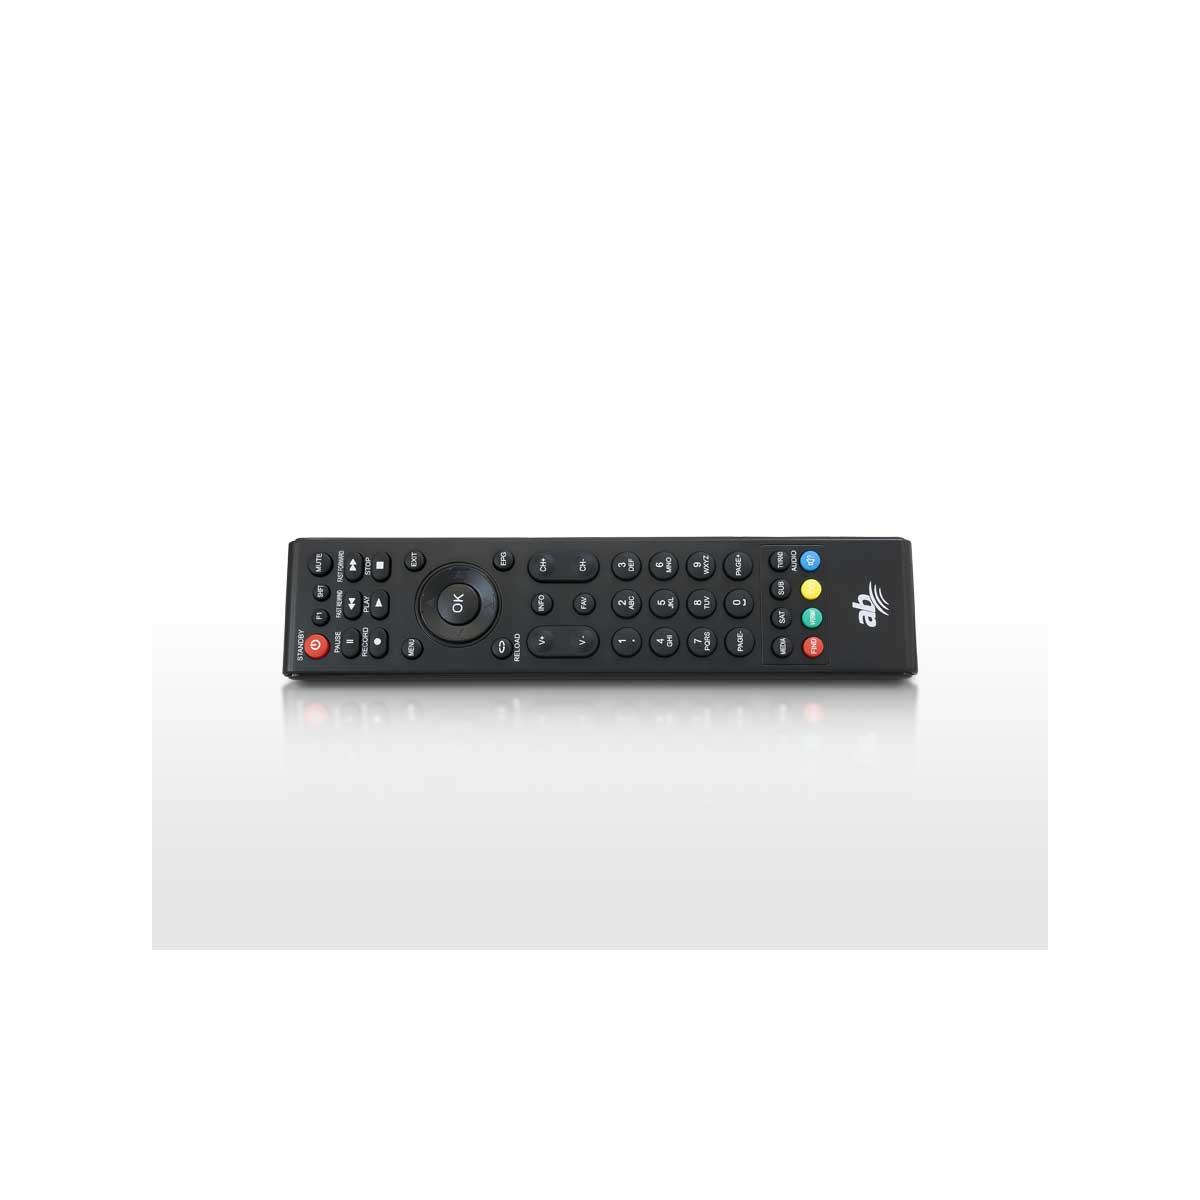 AB-COM CryptoBox 752HD (H.265), DVB-S2, Combo DVB-T2 schwarz) (HDTV, DVB-S, Sat-Receiver PVR-Funktion=optional, DVB-C